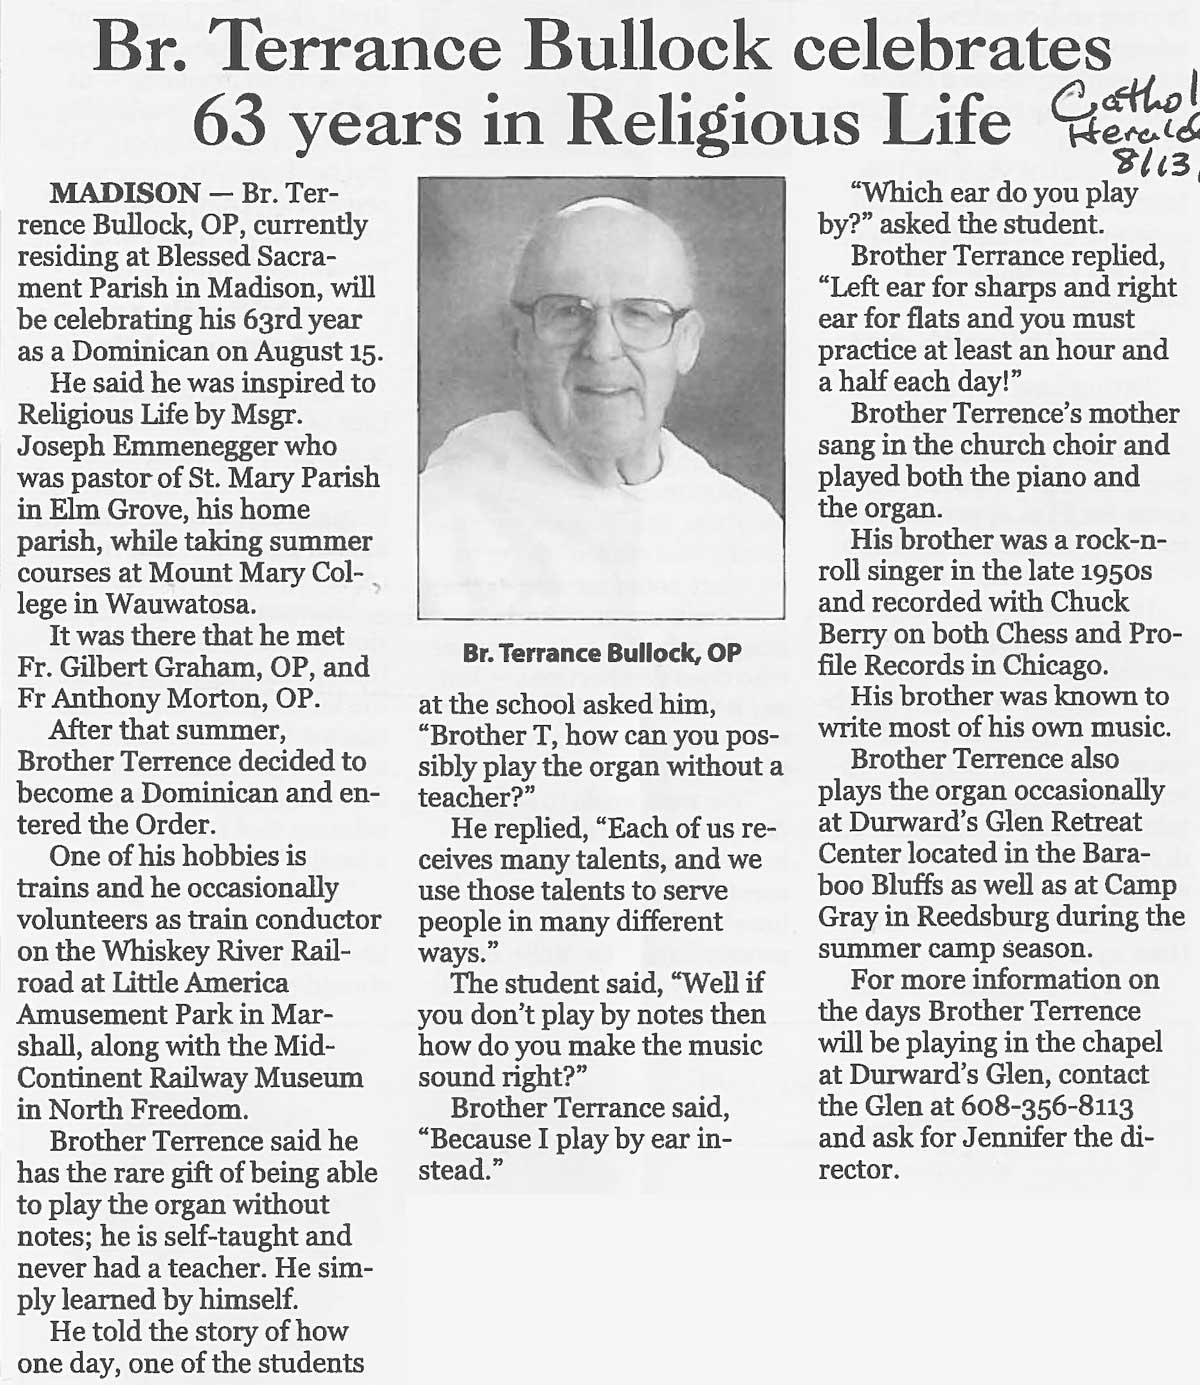 Br. Terrance Bullock celebrates 63 years of Religious Life